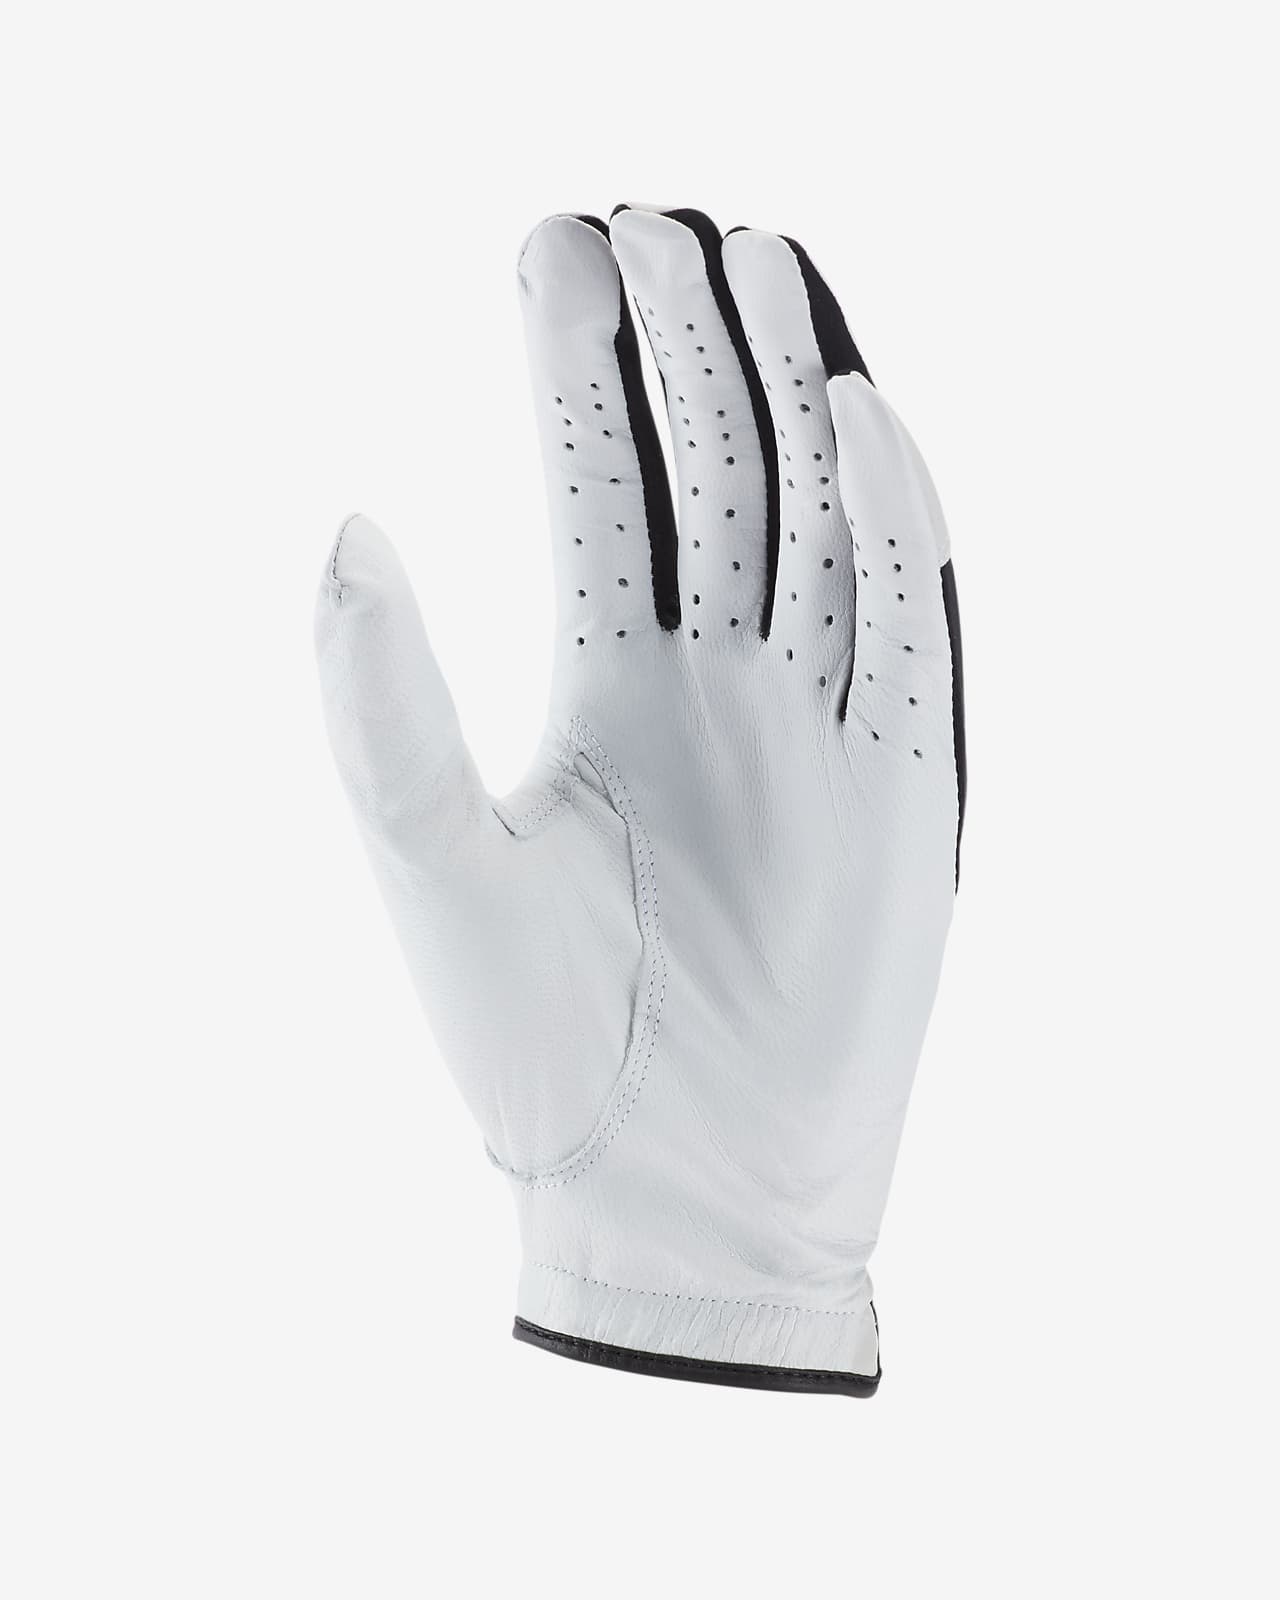 Nike Tech Extreme VII Golf Glove (Left Regular).